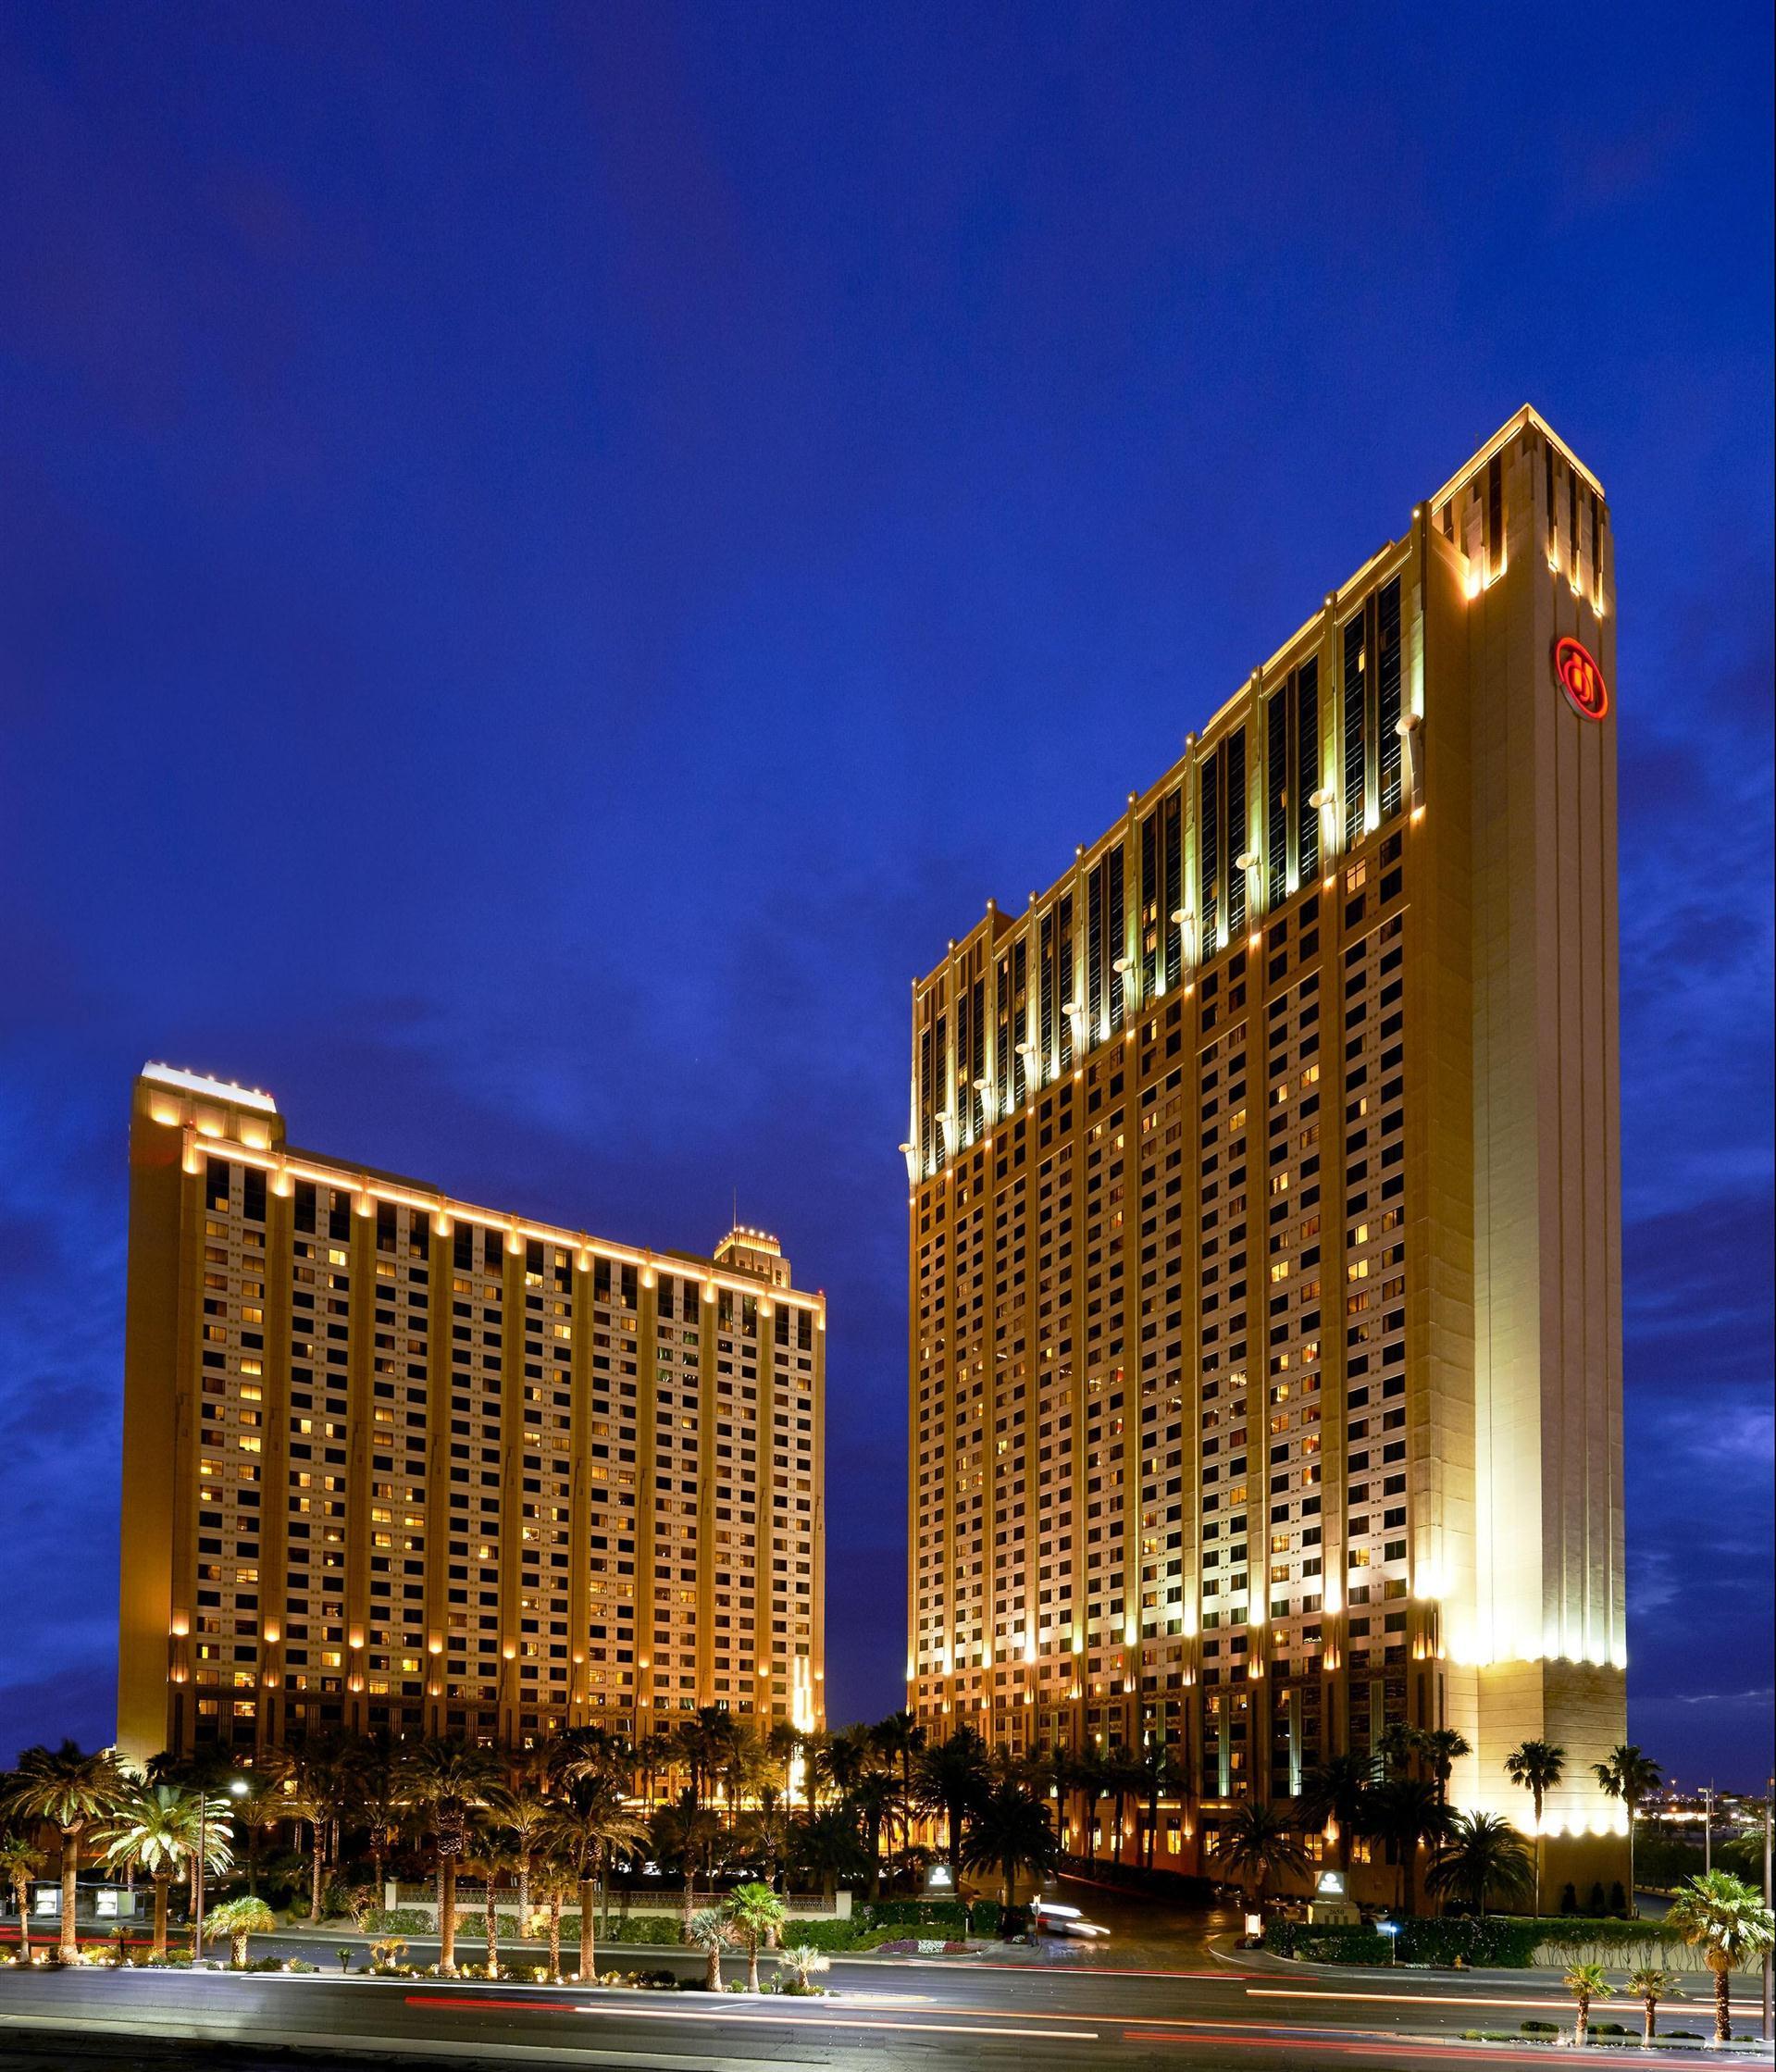 Hilton Grand Vacations Club on the Las Vegas Strip in Las Vegas, NV